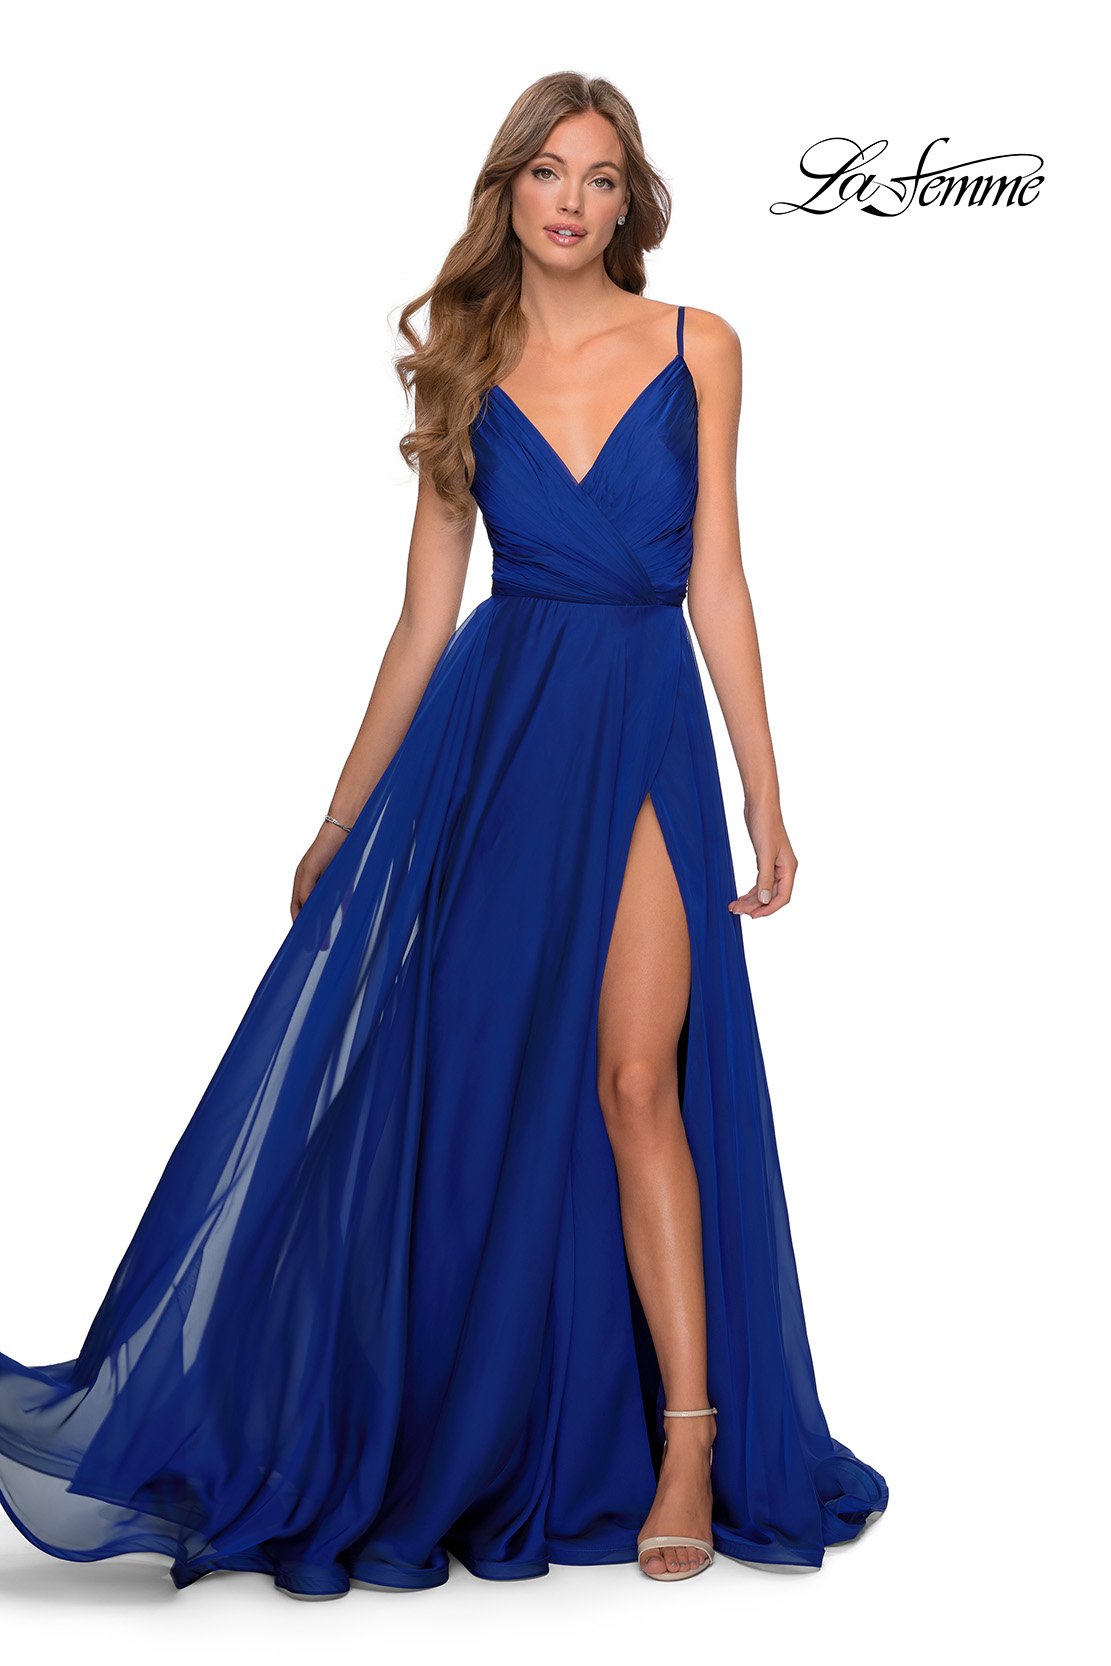 marine blue dress